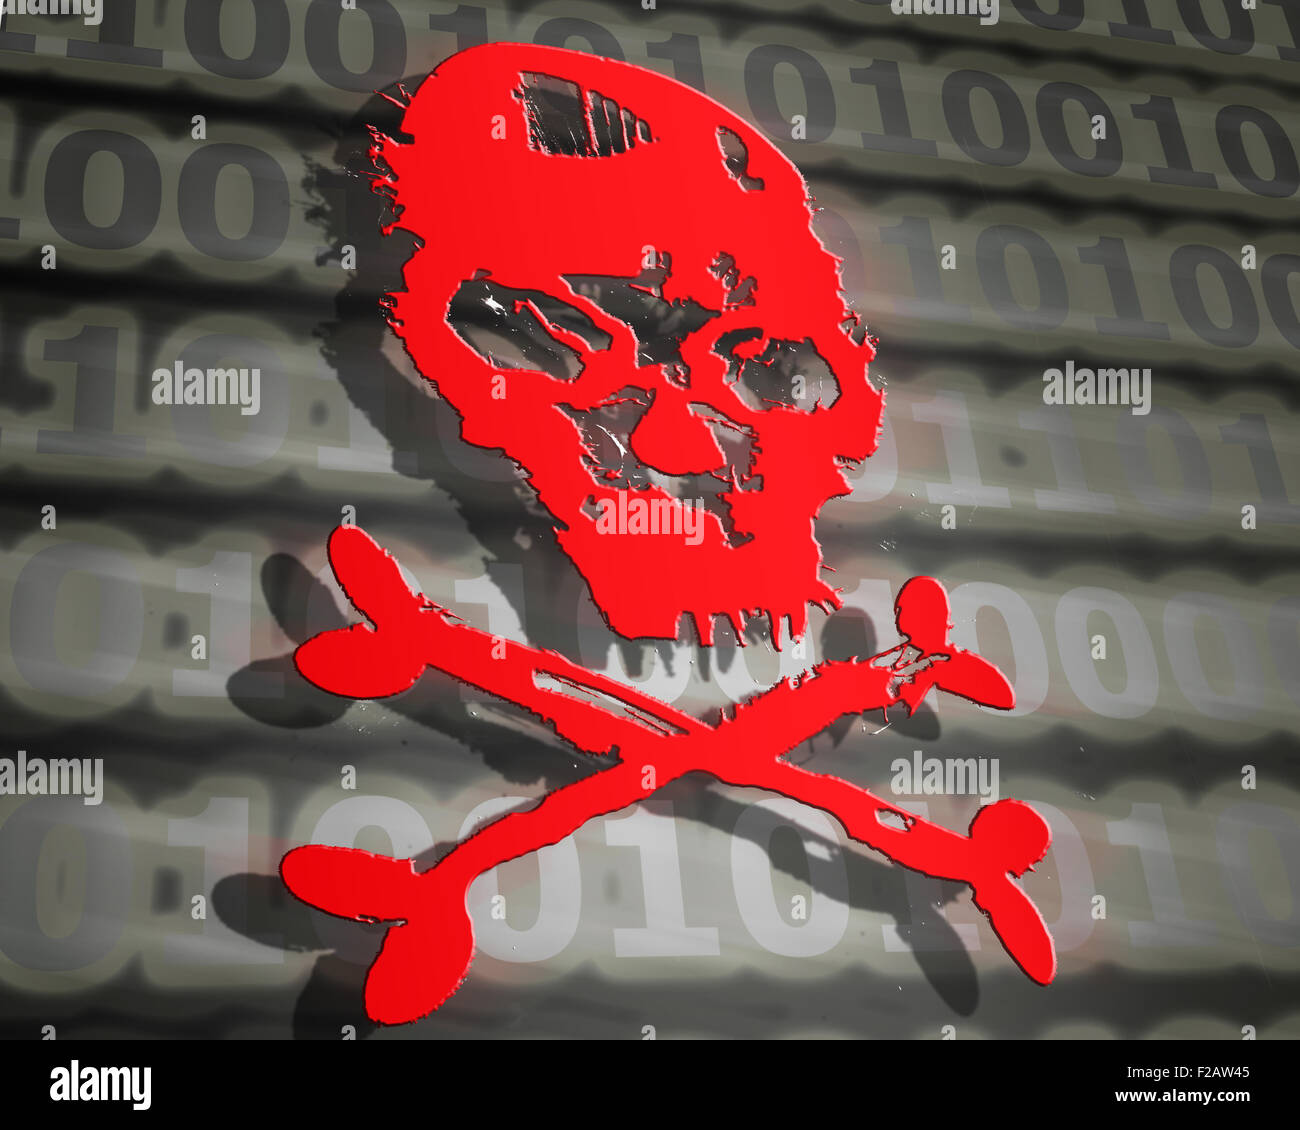 hacker attack concept digital illustration Stock Photo